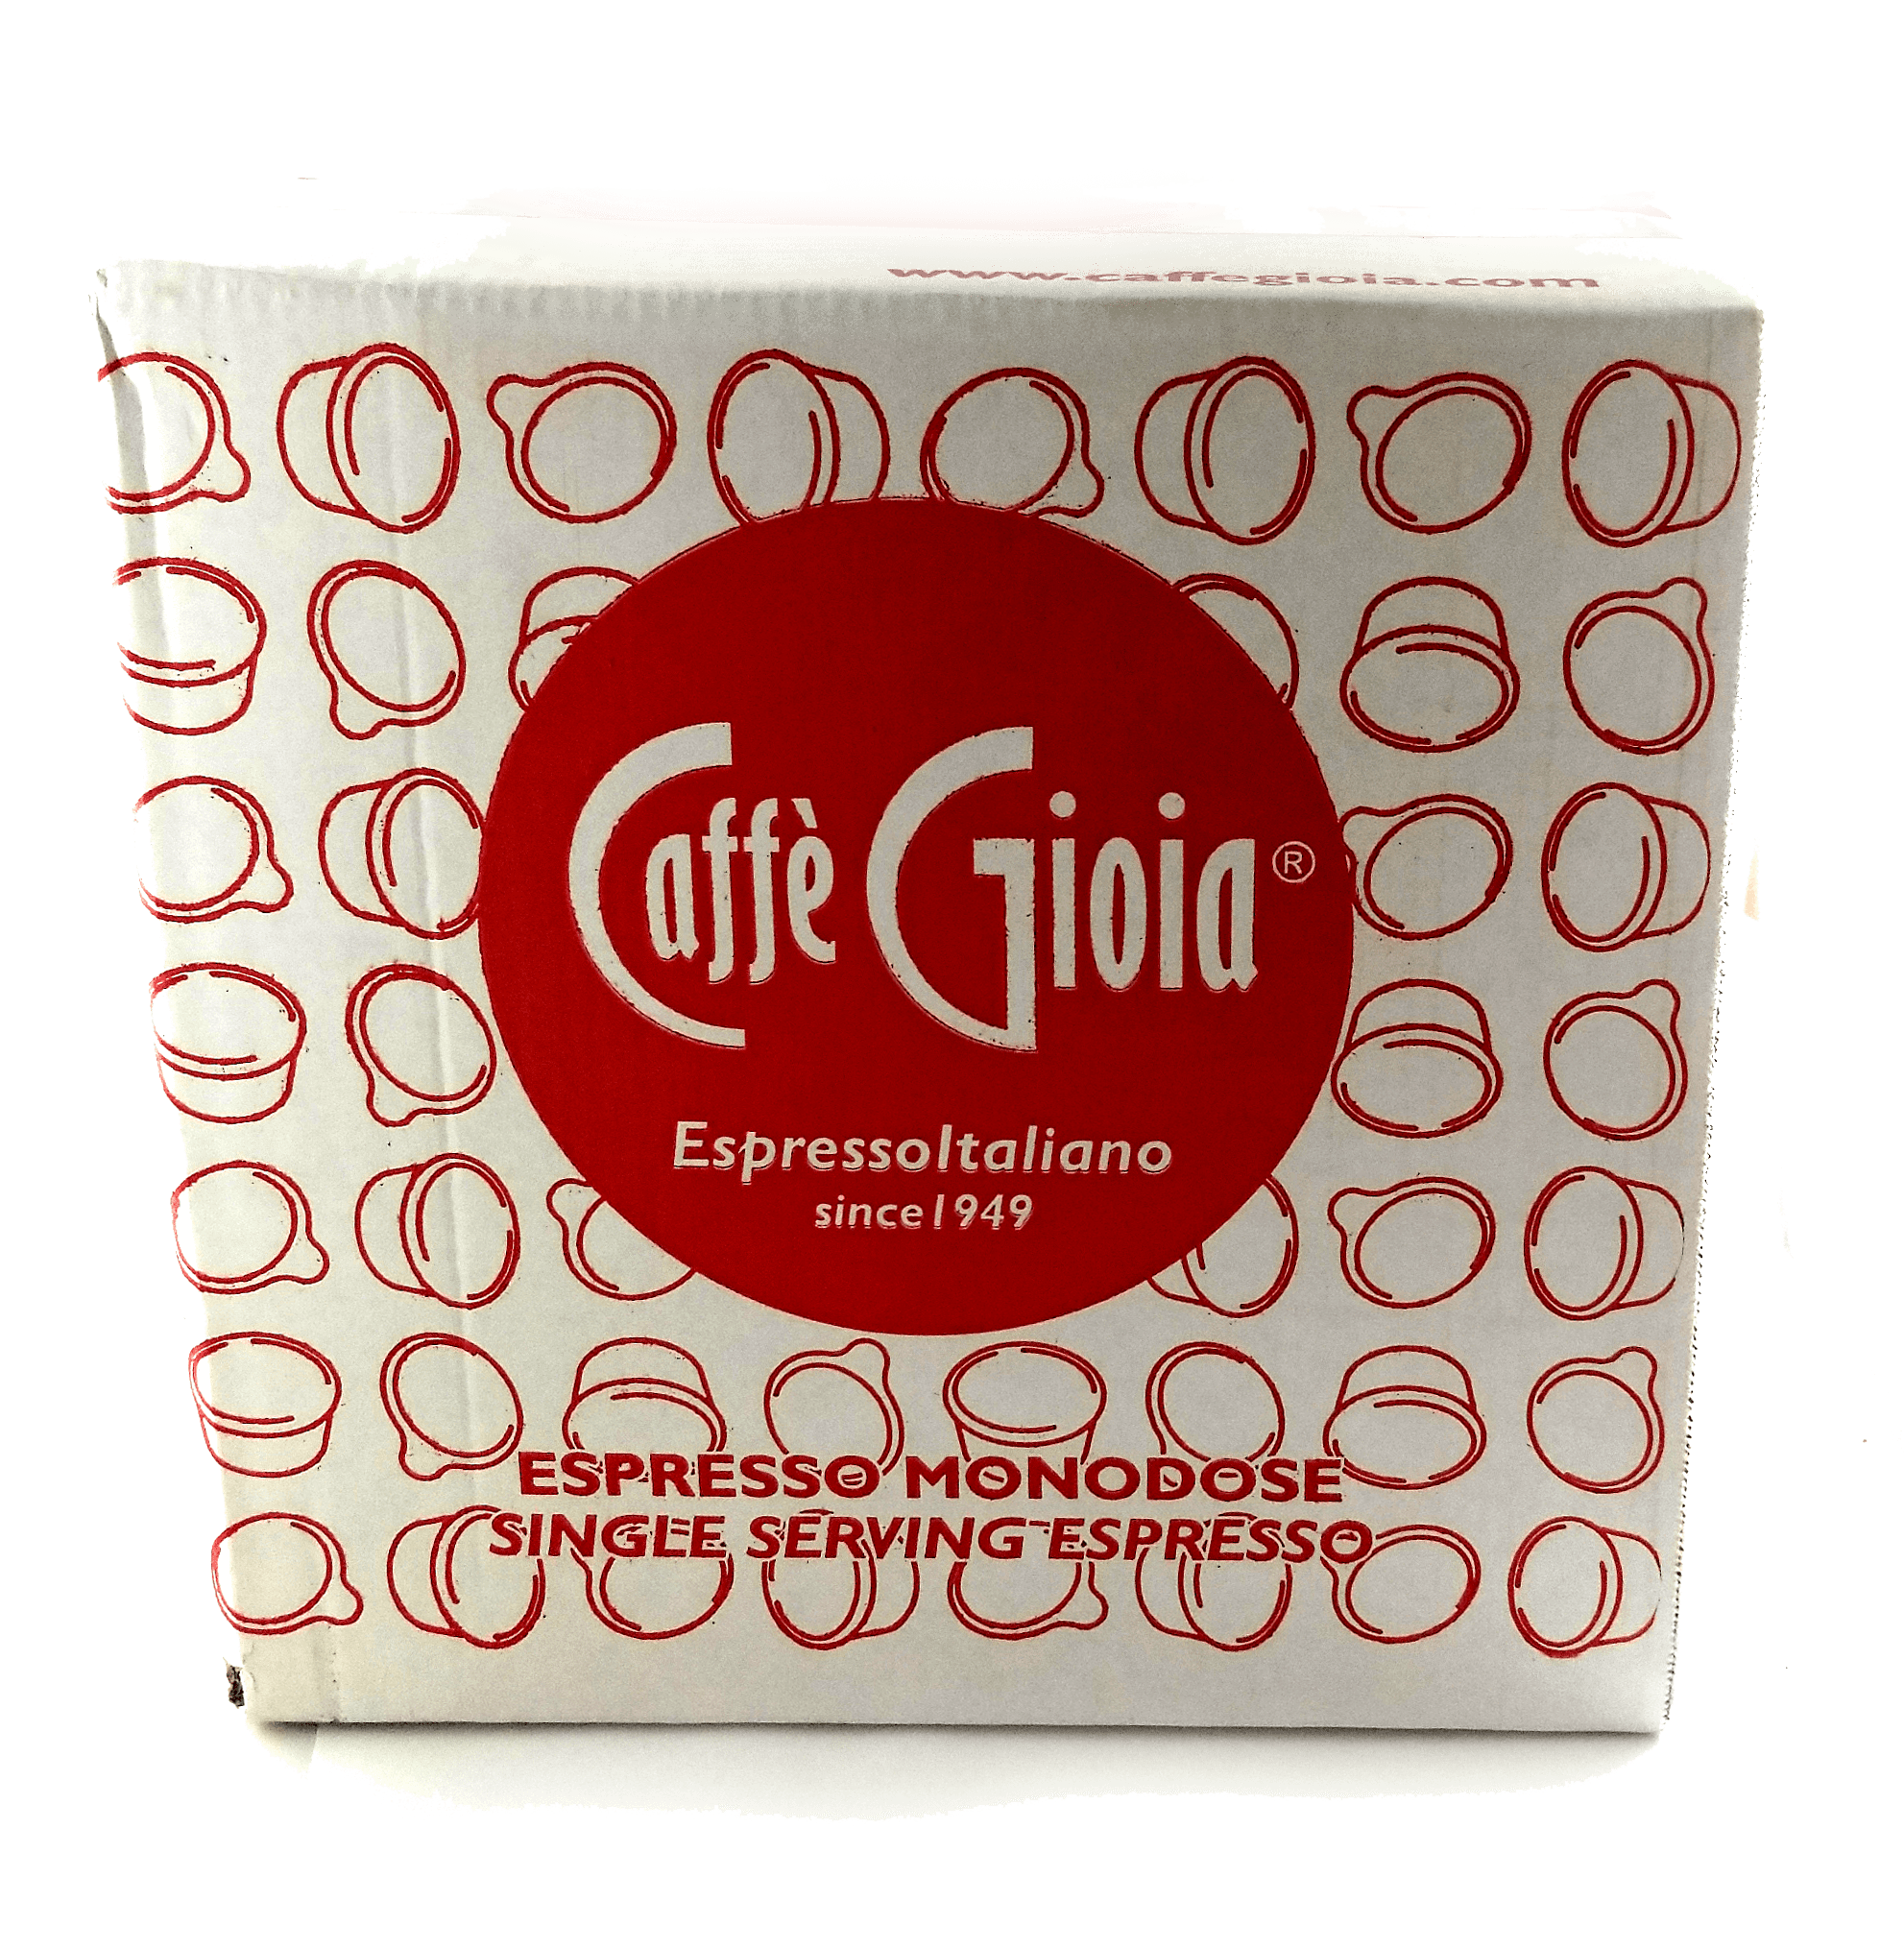 Coffee - Decaffeinated Caffe Gioia Coffee Italian Import - Box Of 50 Decaffeinated ESE Pods - Kosher